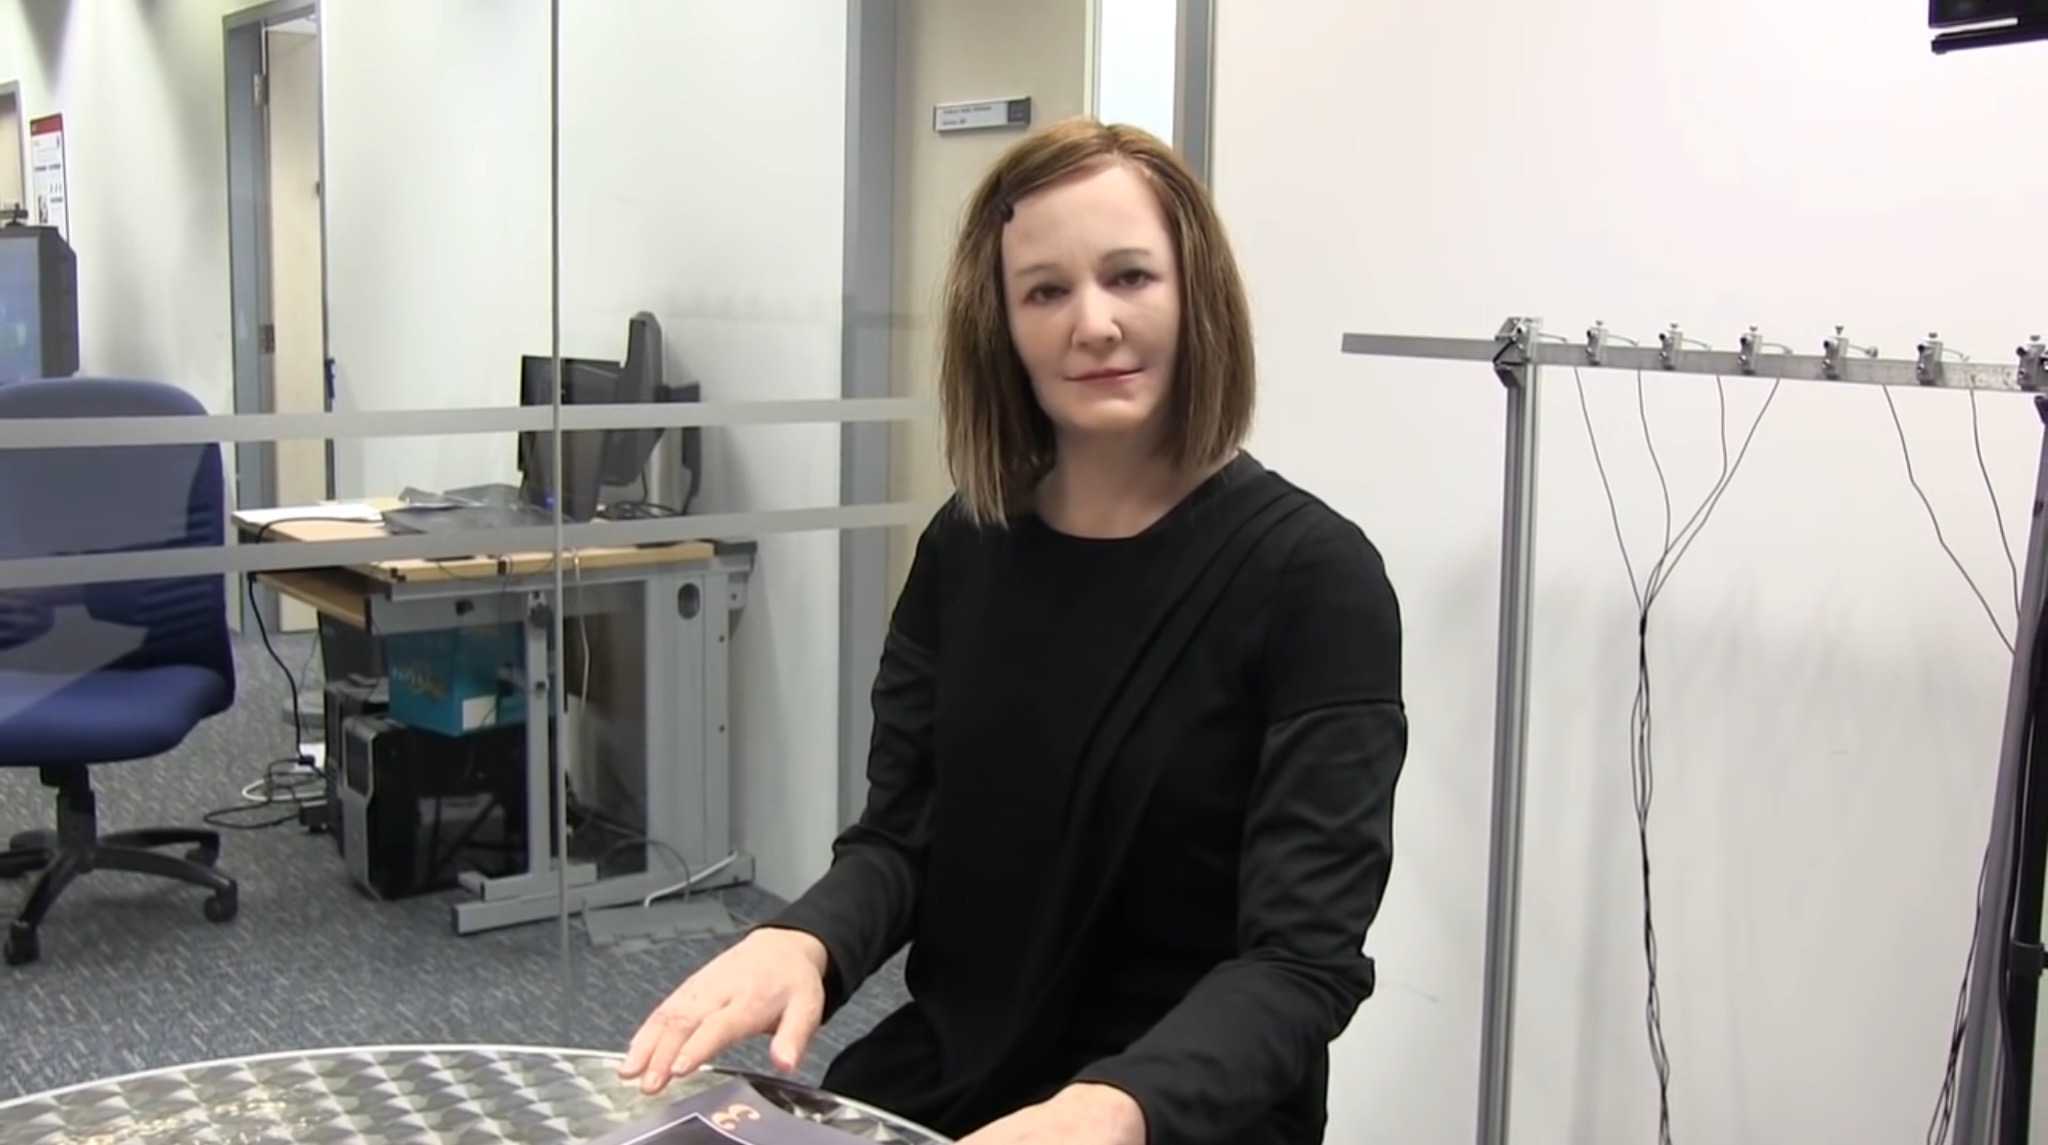 Nadine robotic assistant